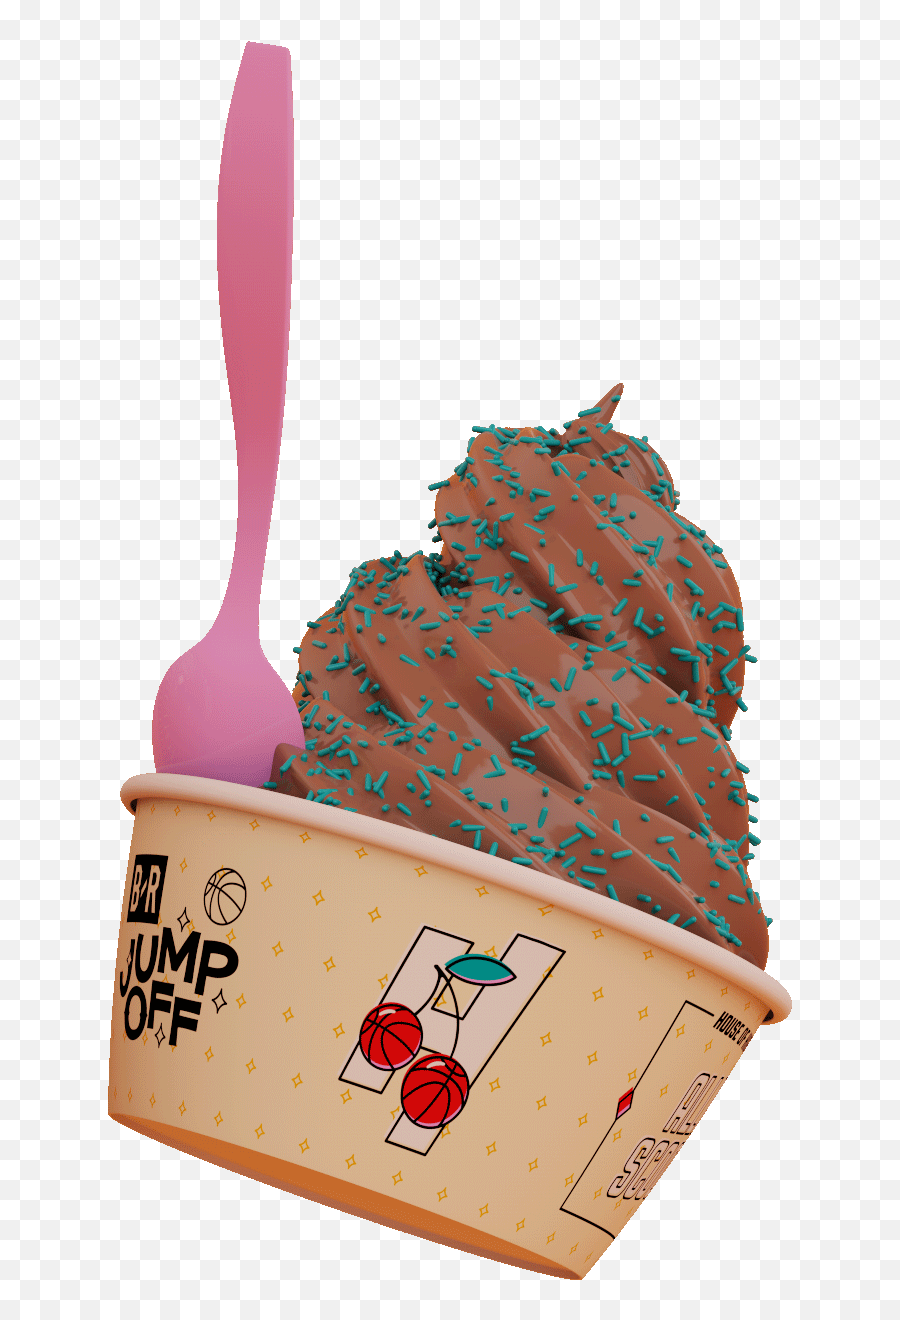 Br Jump - Off Emoji,Emoji Theme Ice Cream Sundae Dish